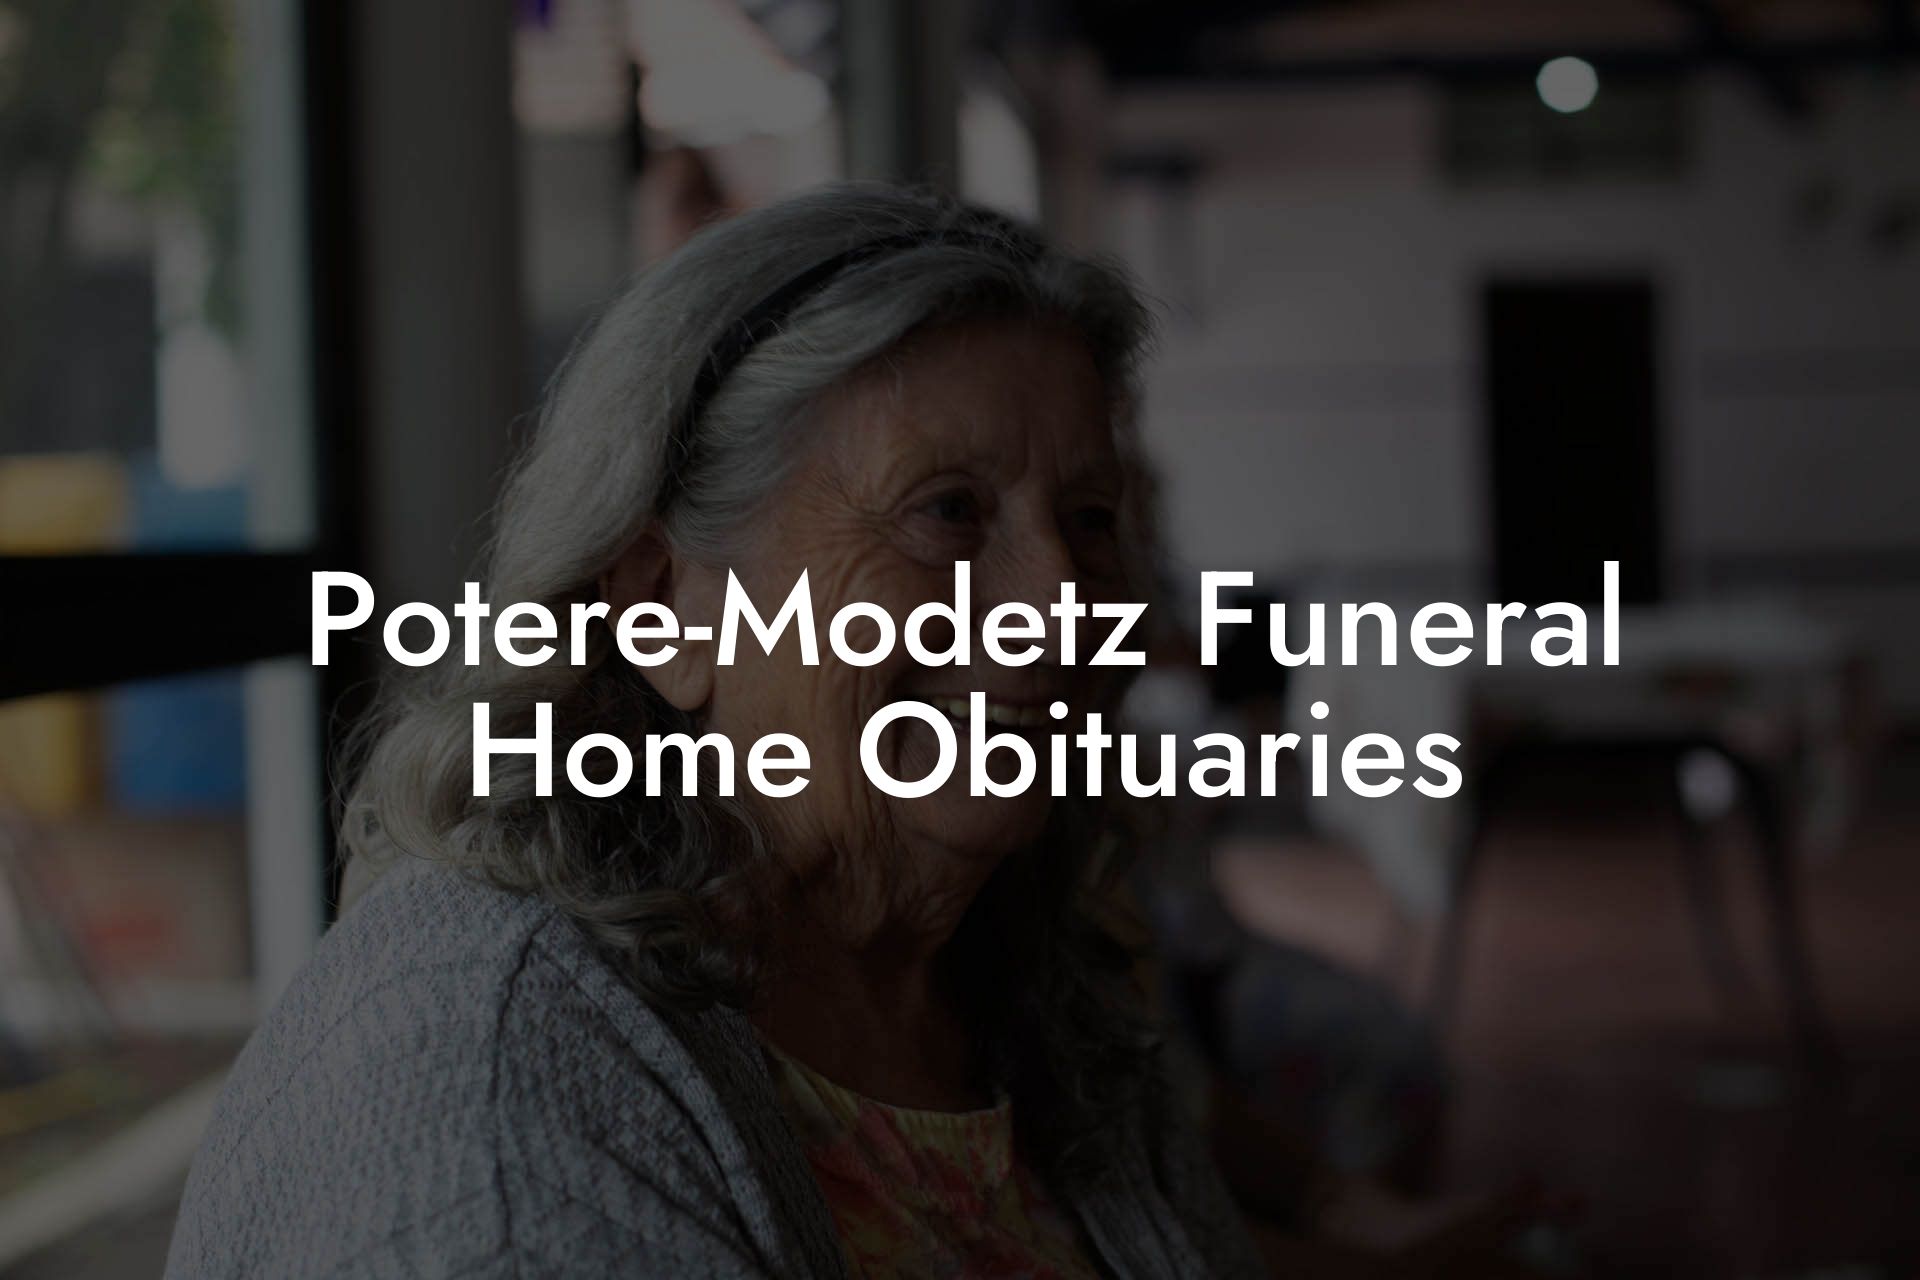 Potere-Modetz Funeral Home Obituaries